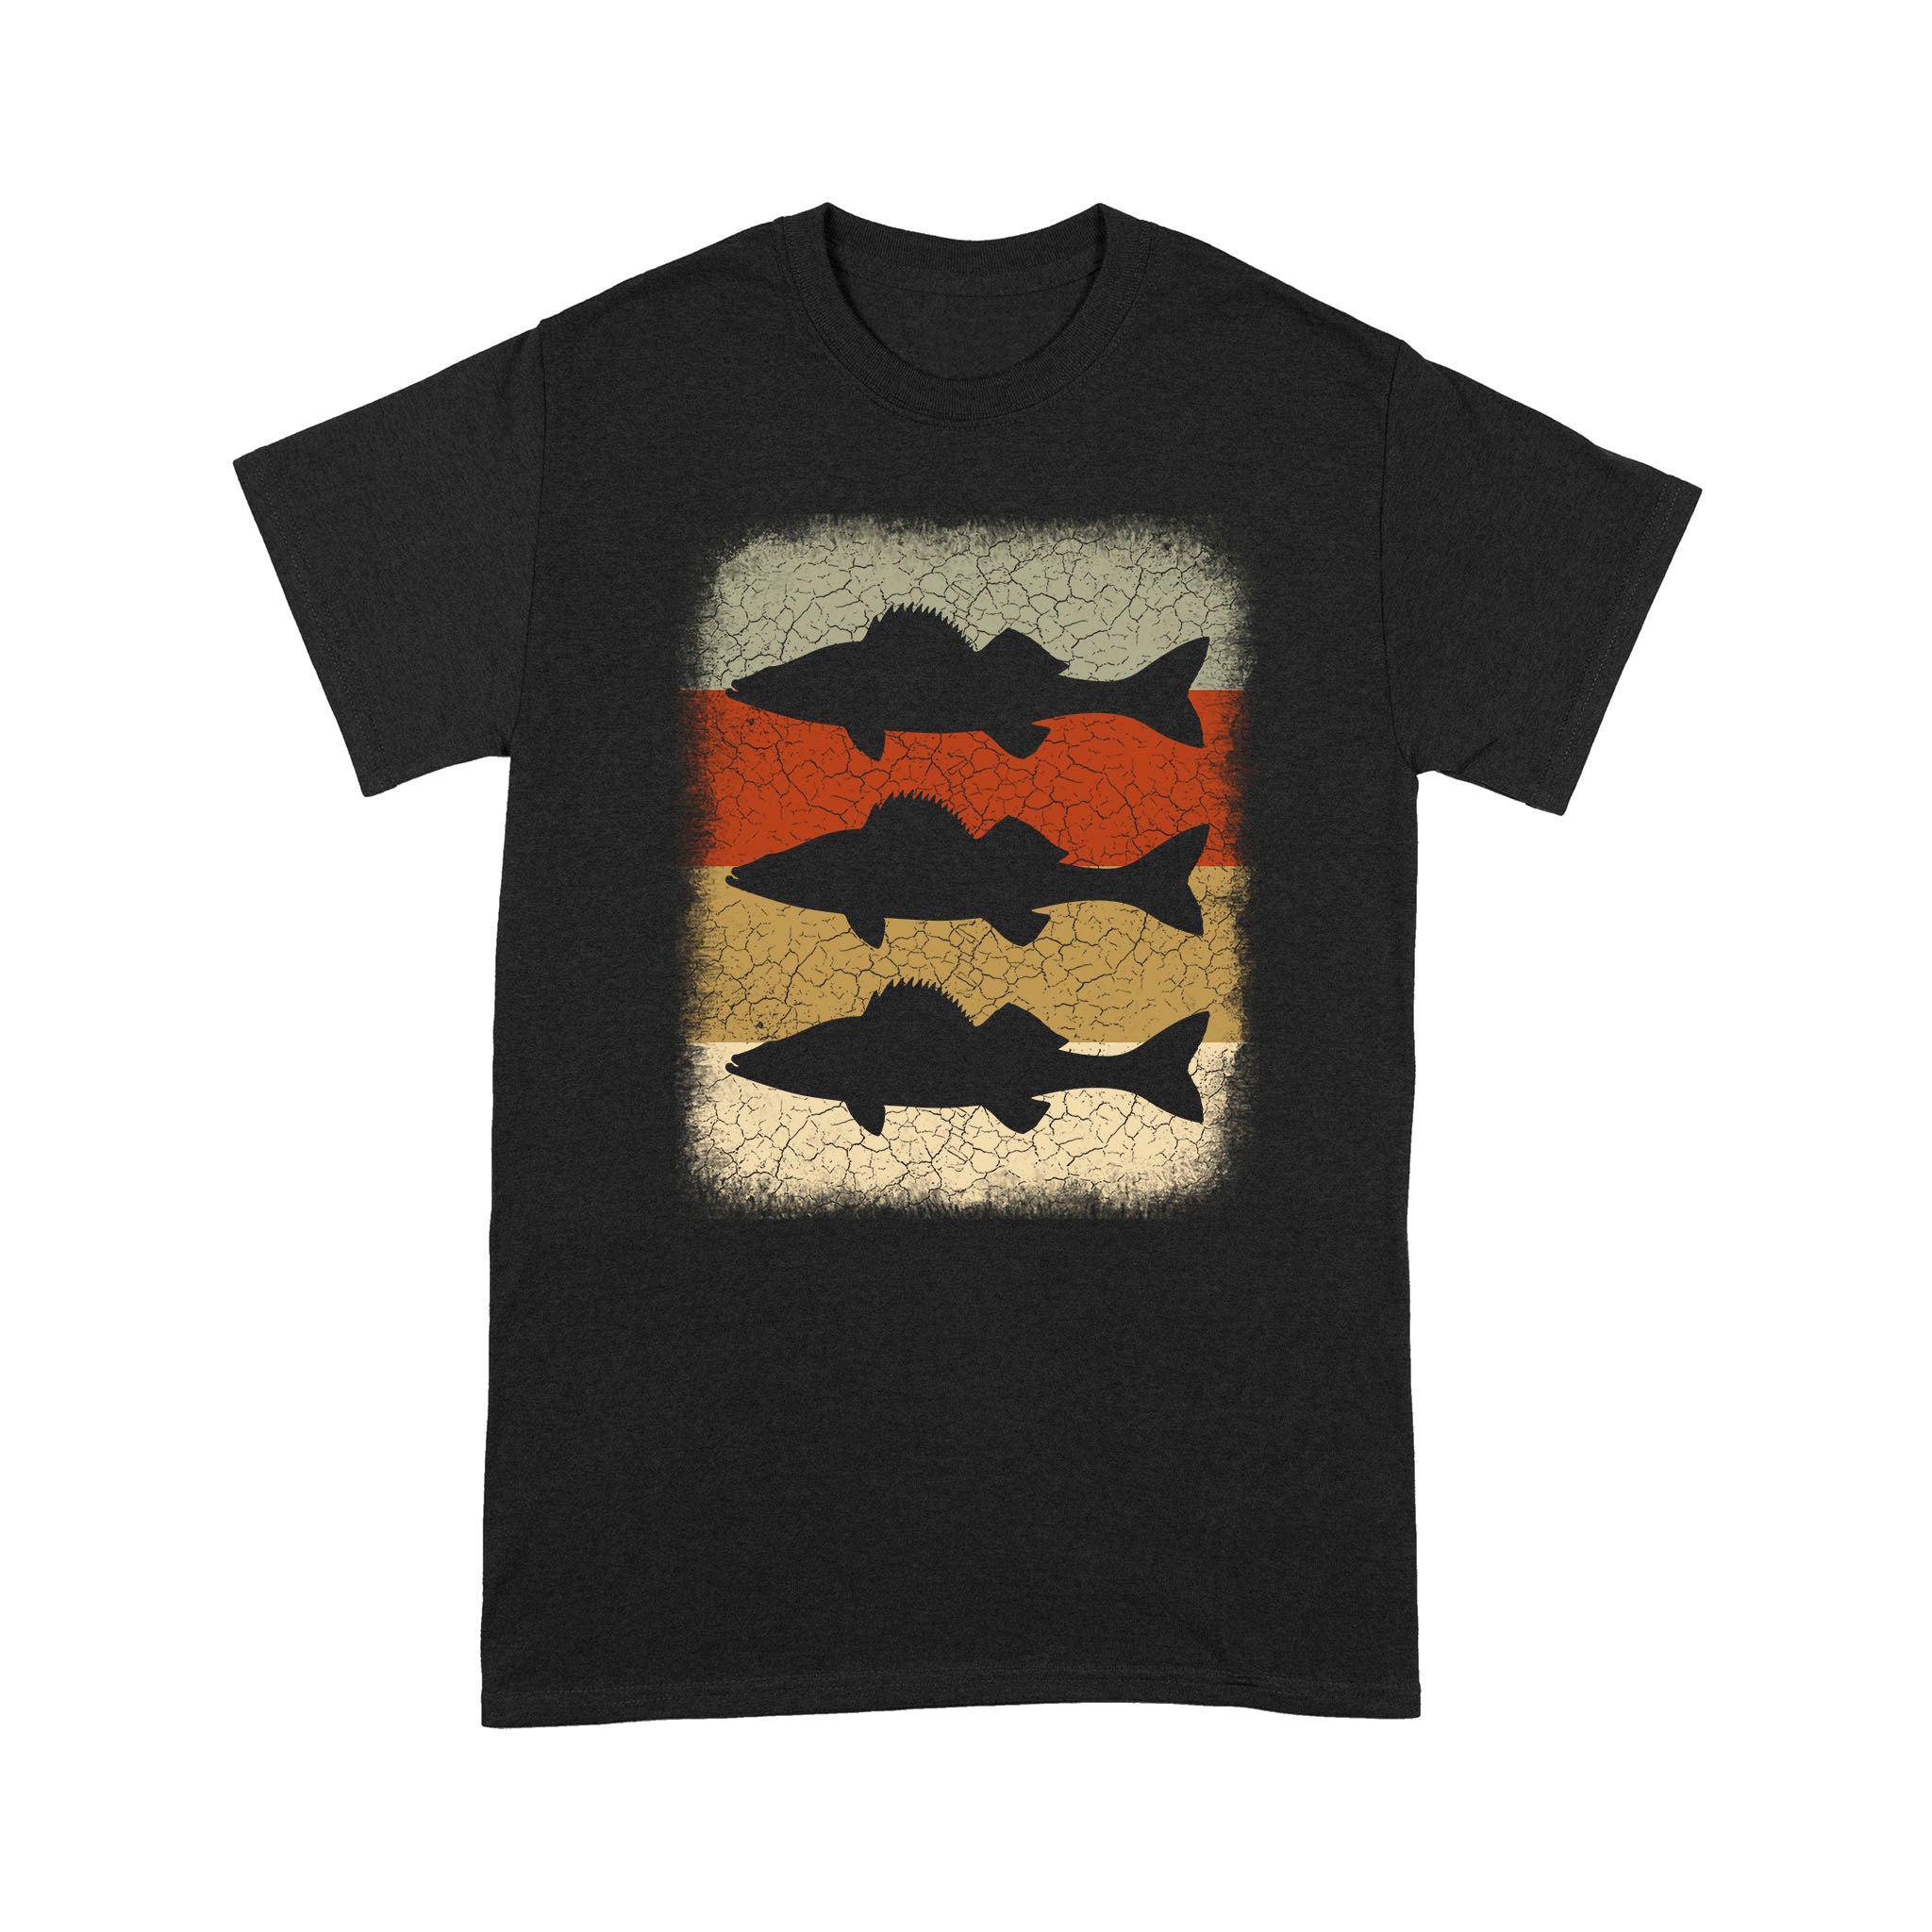 Retro Vintage Walleye Fishing Shirt, Fisherman Gift D03 NQS3136 T-Shirt, M / Black